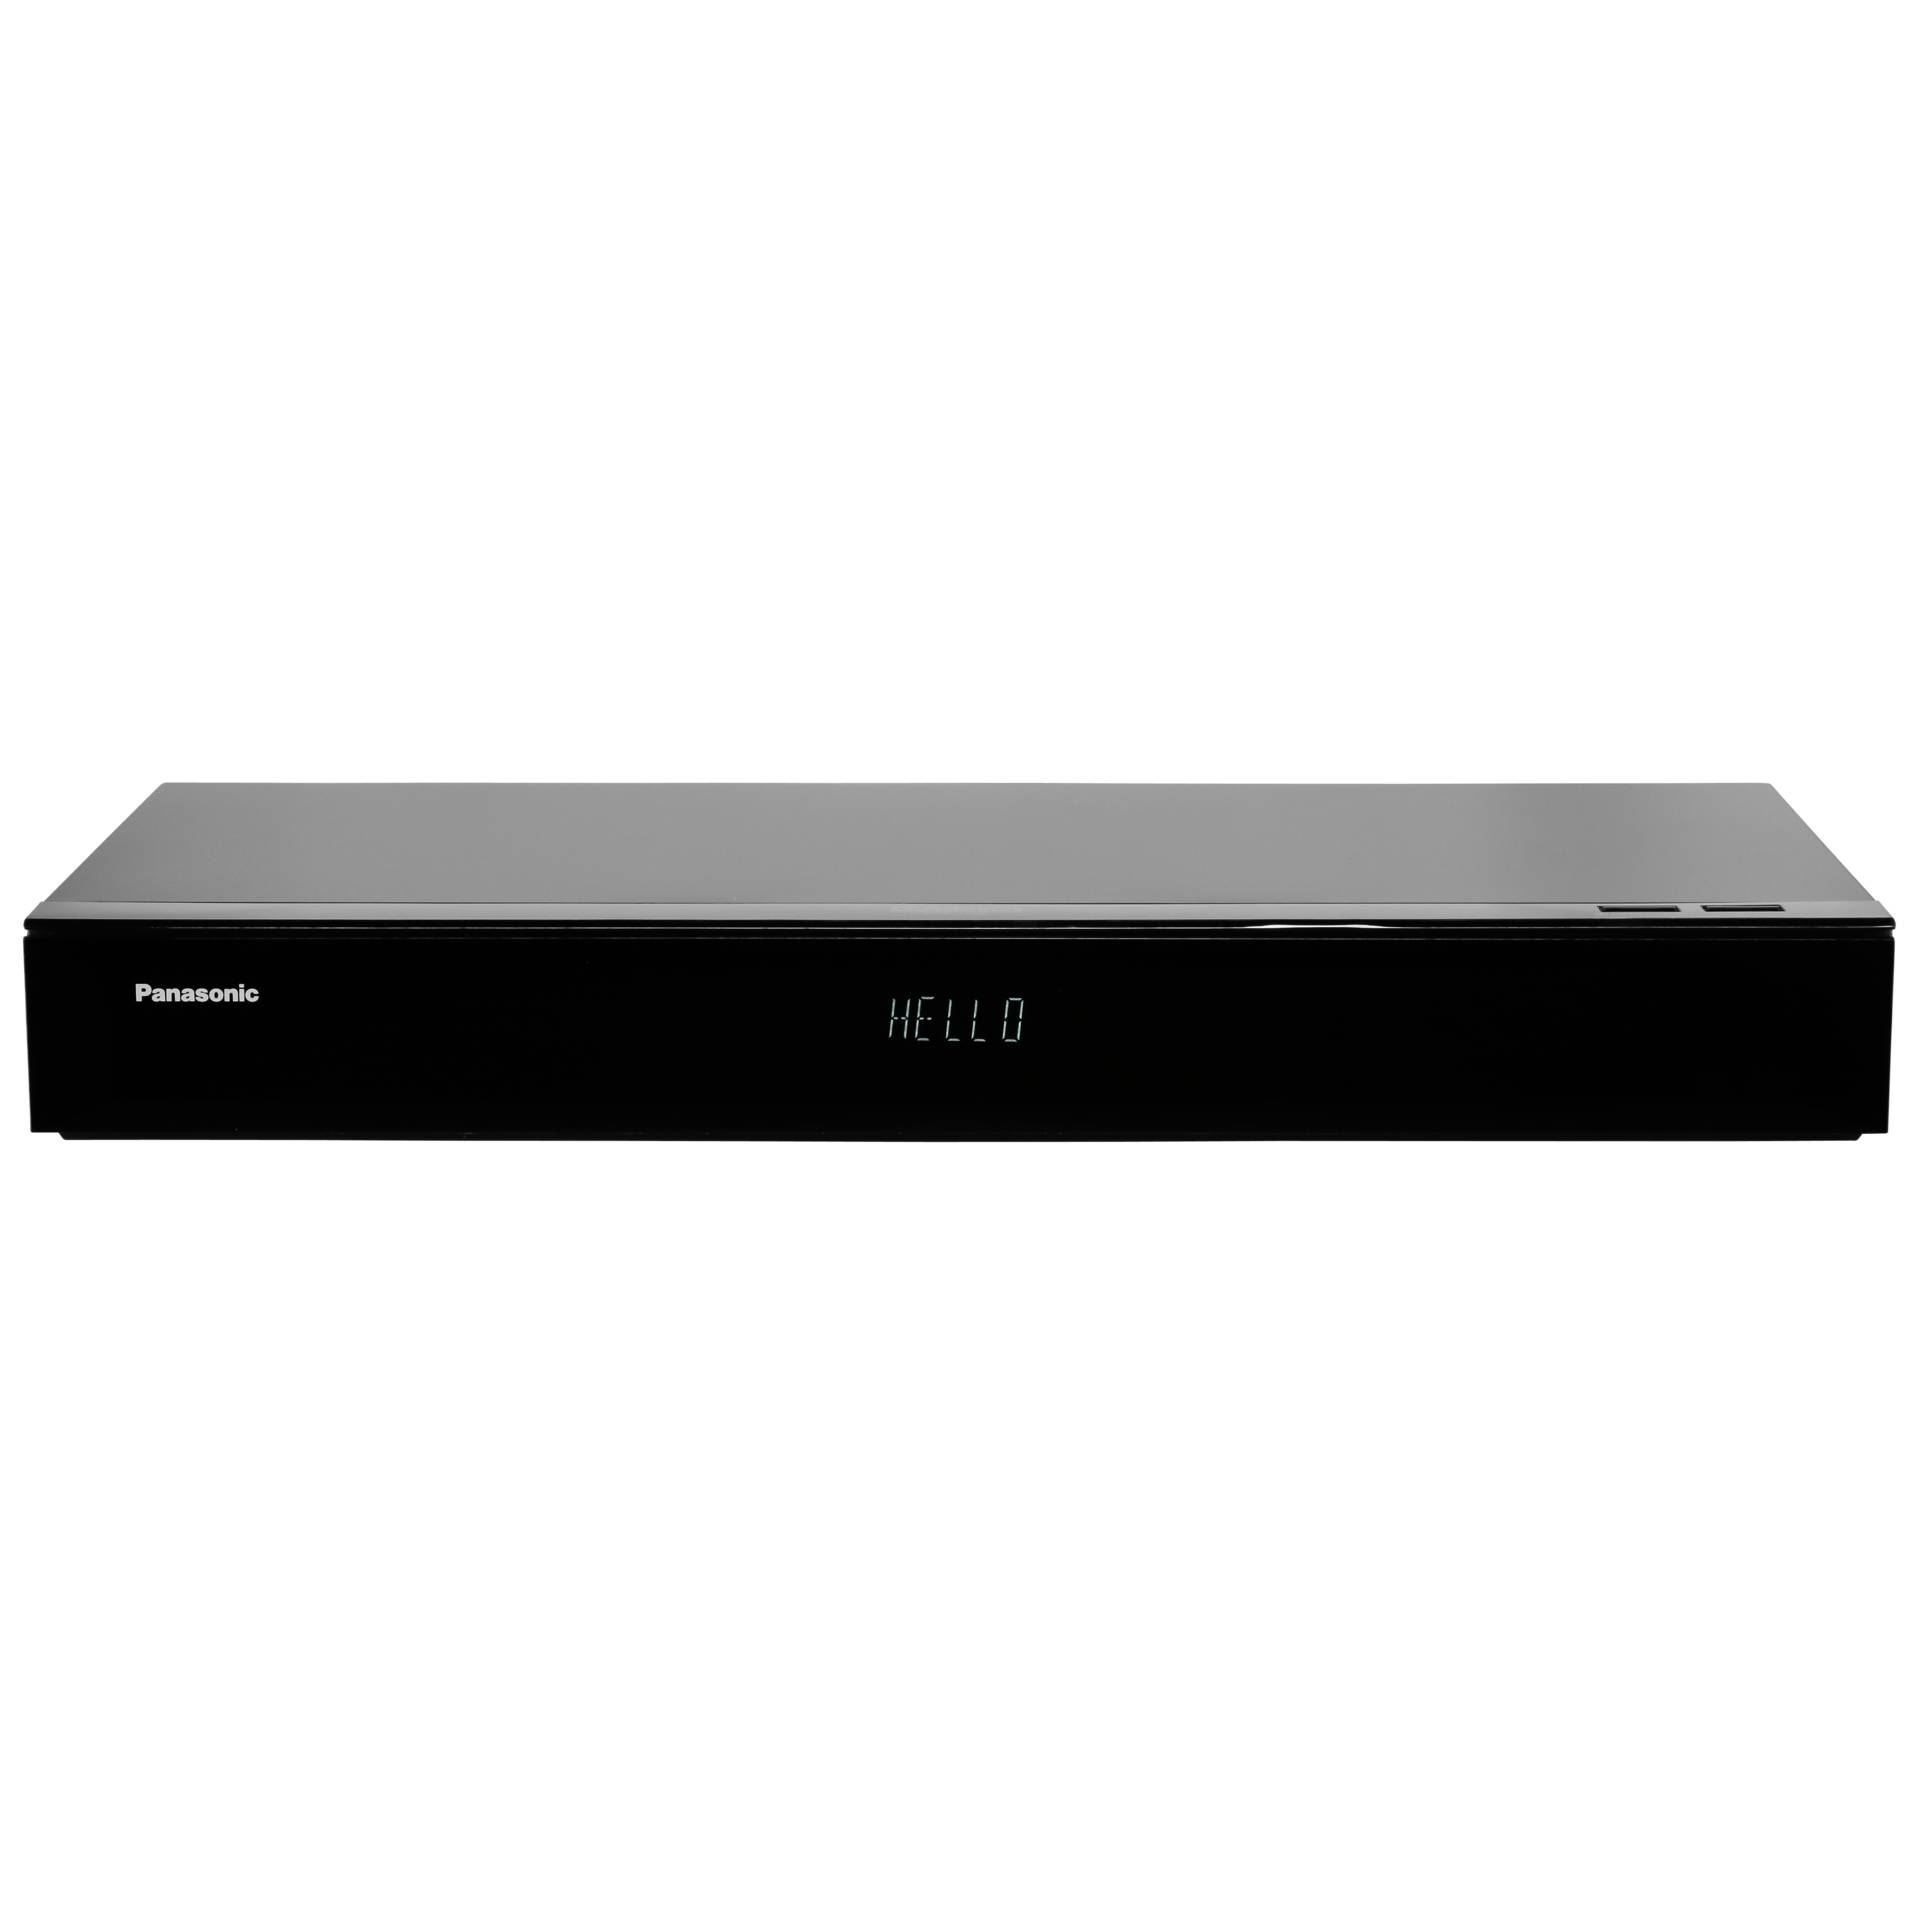 Panasonic DMR-UBC70, Blu-ray-Rekorder schwarz, 500GB, USB, LAN, WLAN, Ultra HD Premium